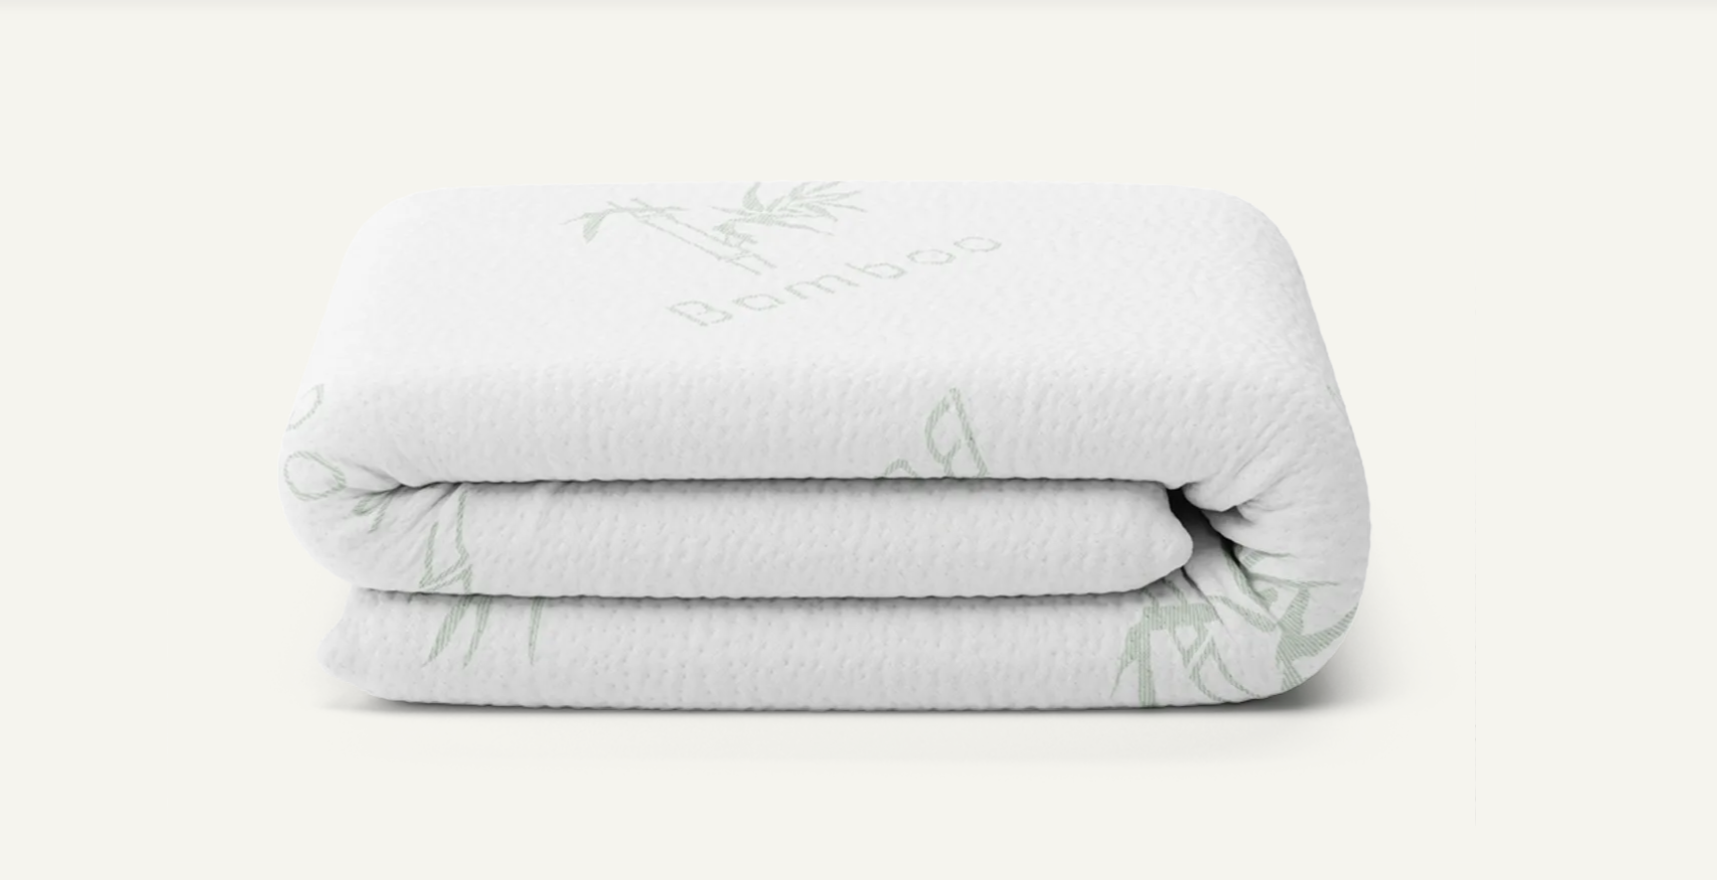 Nolah bamboo mattress protector review: Materials